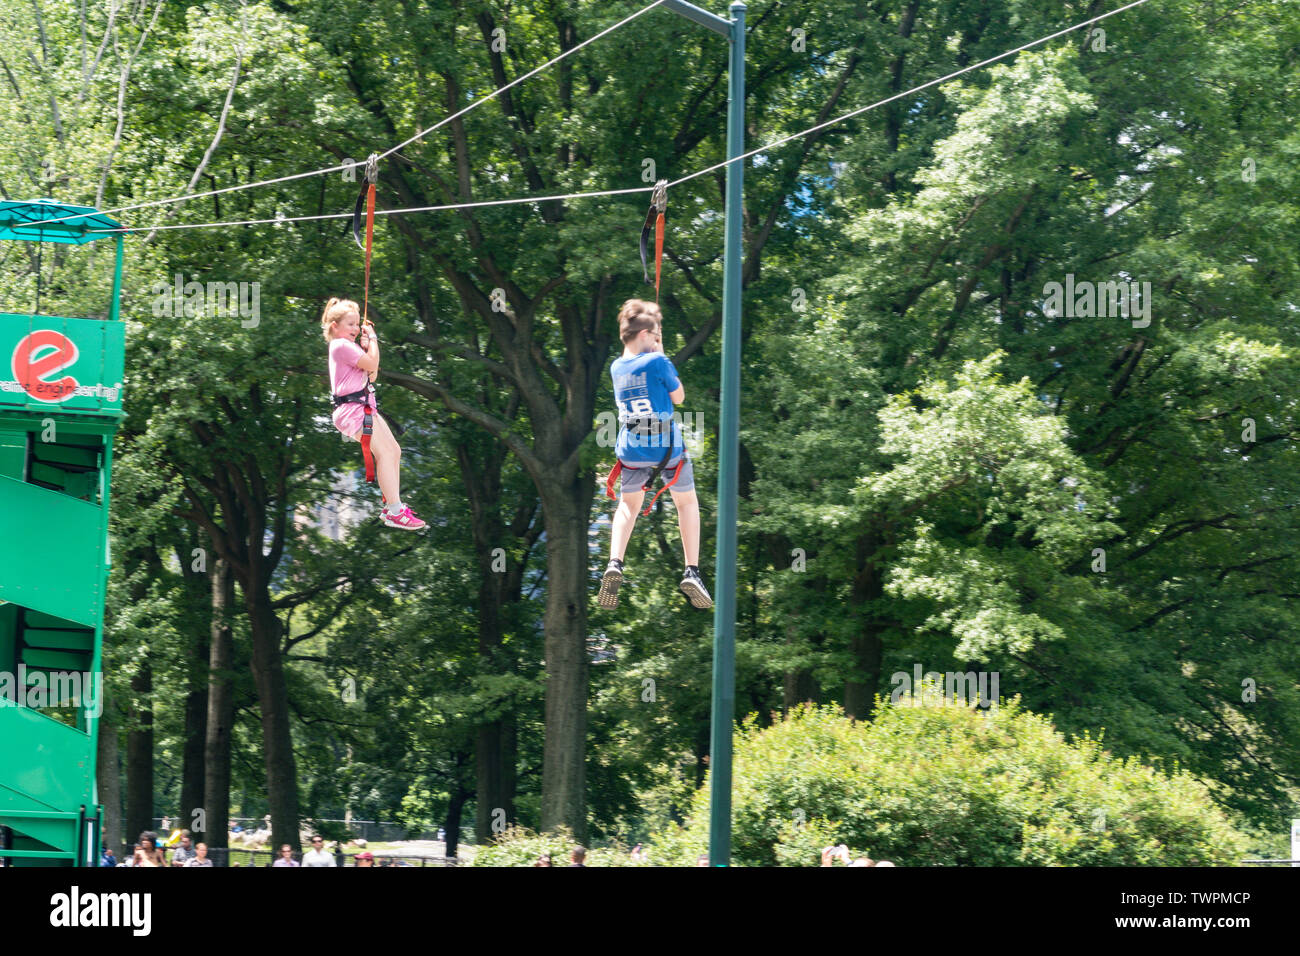 Mini Zipline, Central park, NYC, USA Stock Photo